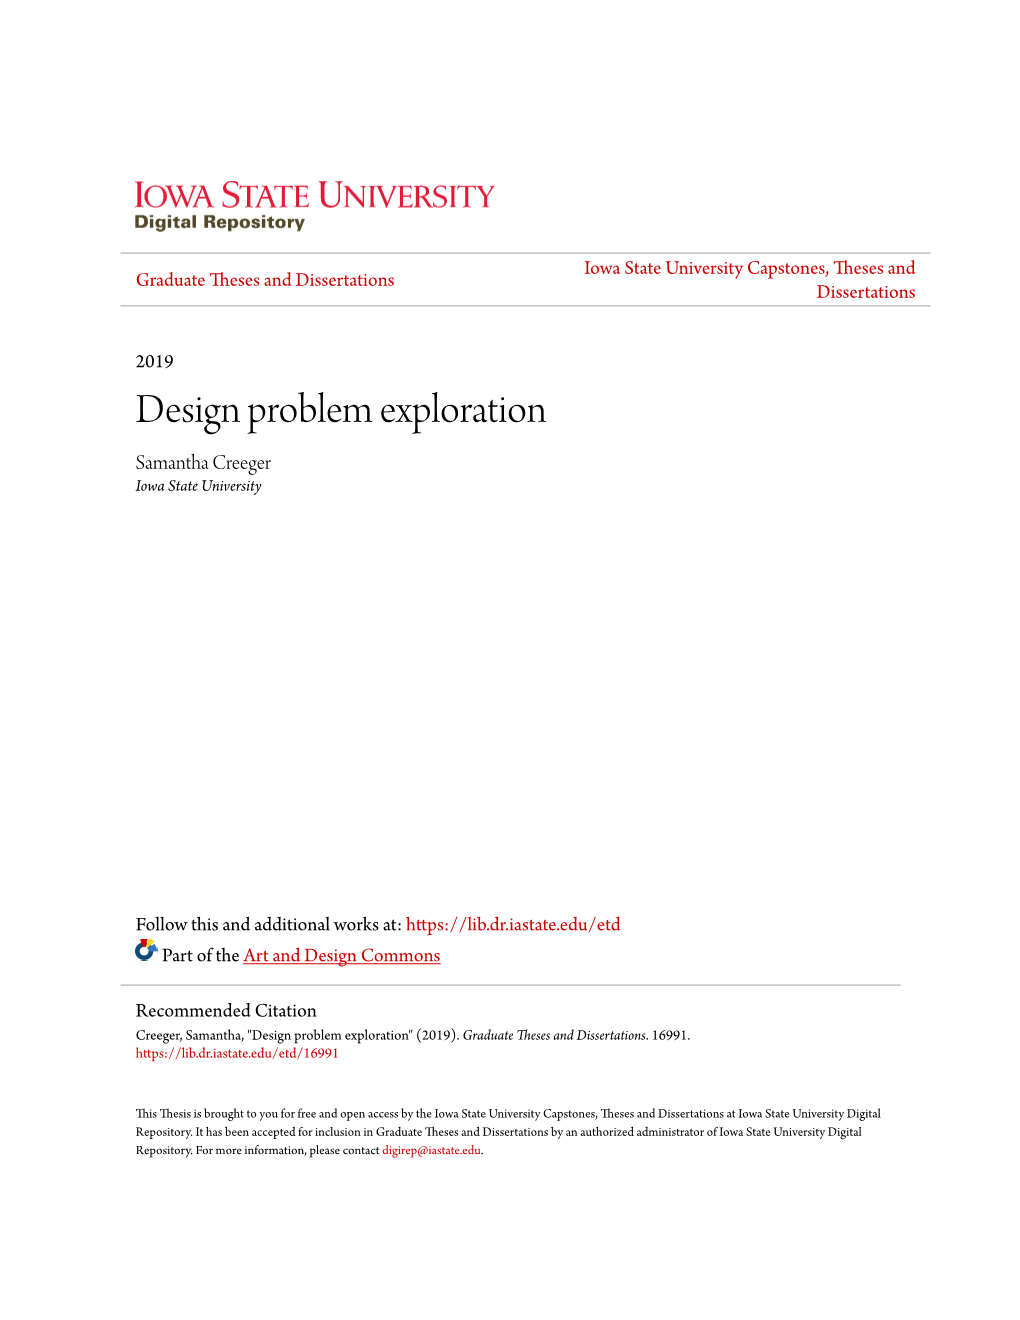 Design Problem Exploration Samantha Creeger Iowa State University